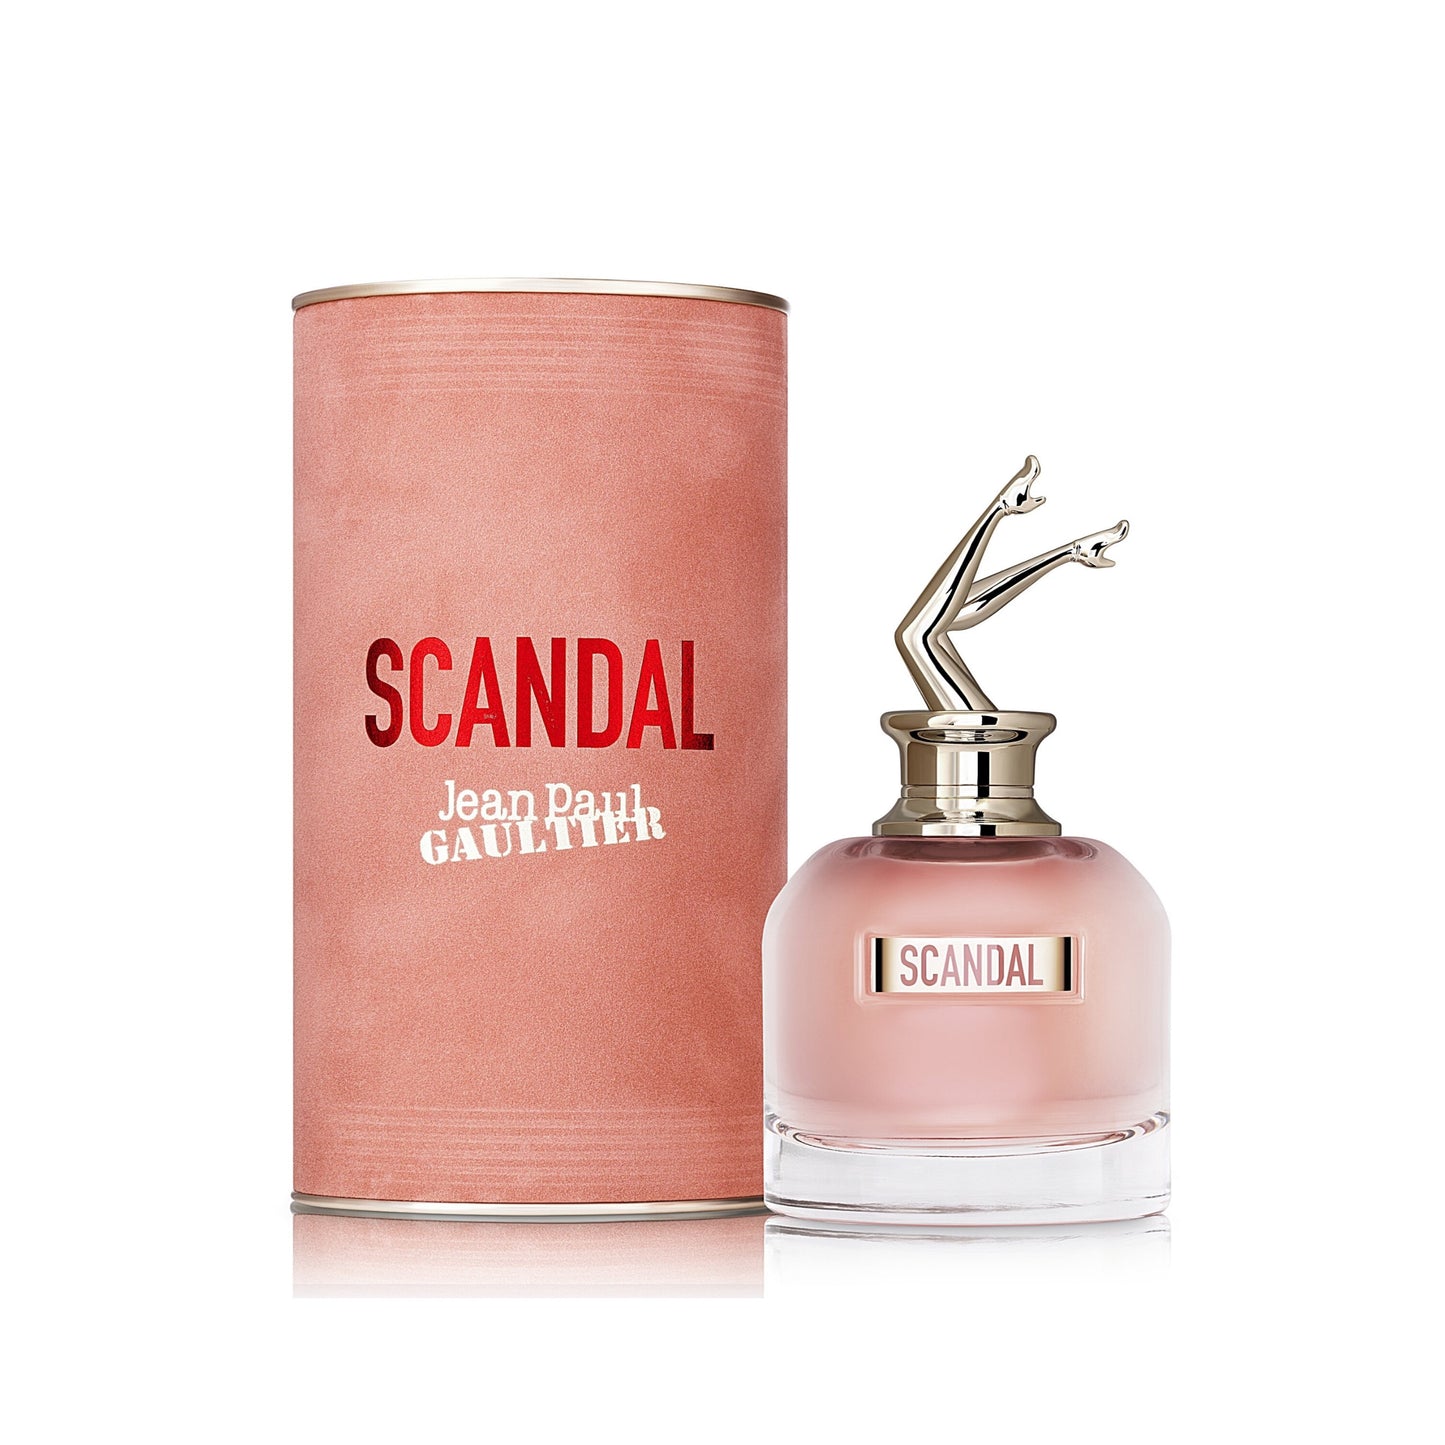 Jean Paul Gaultier Scandal Eau De Parfum 80ml for Her